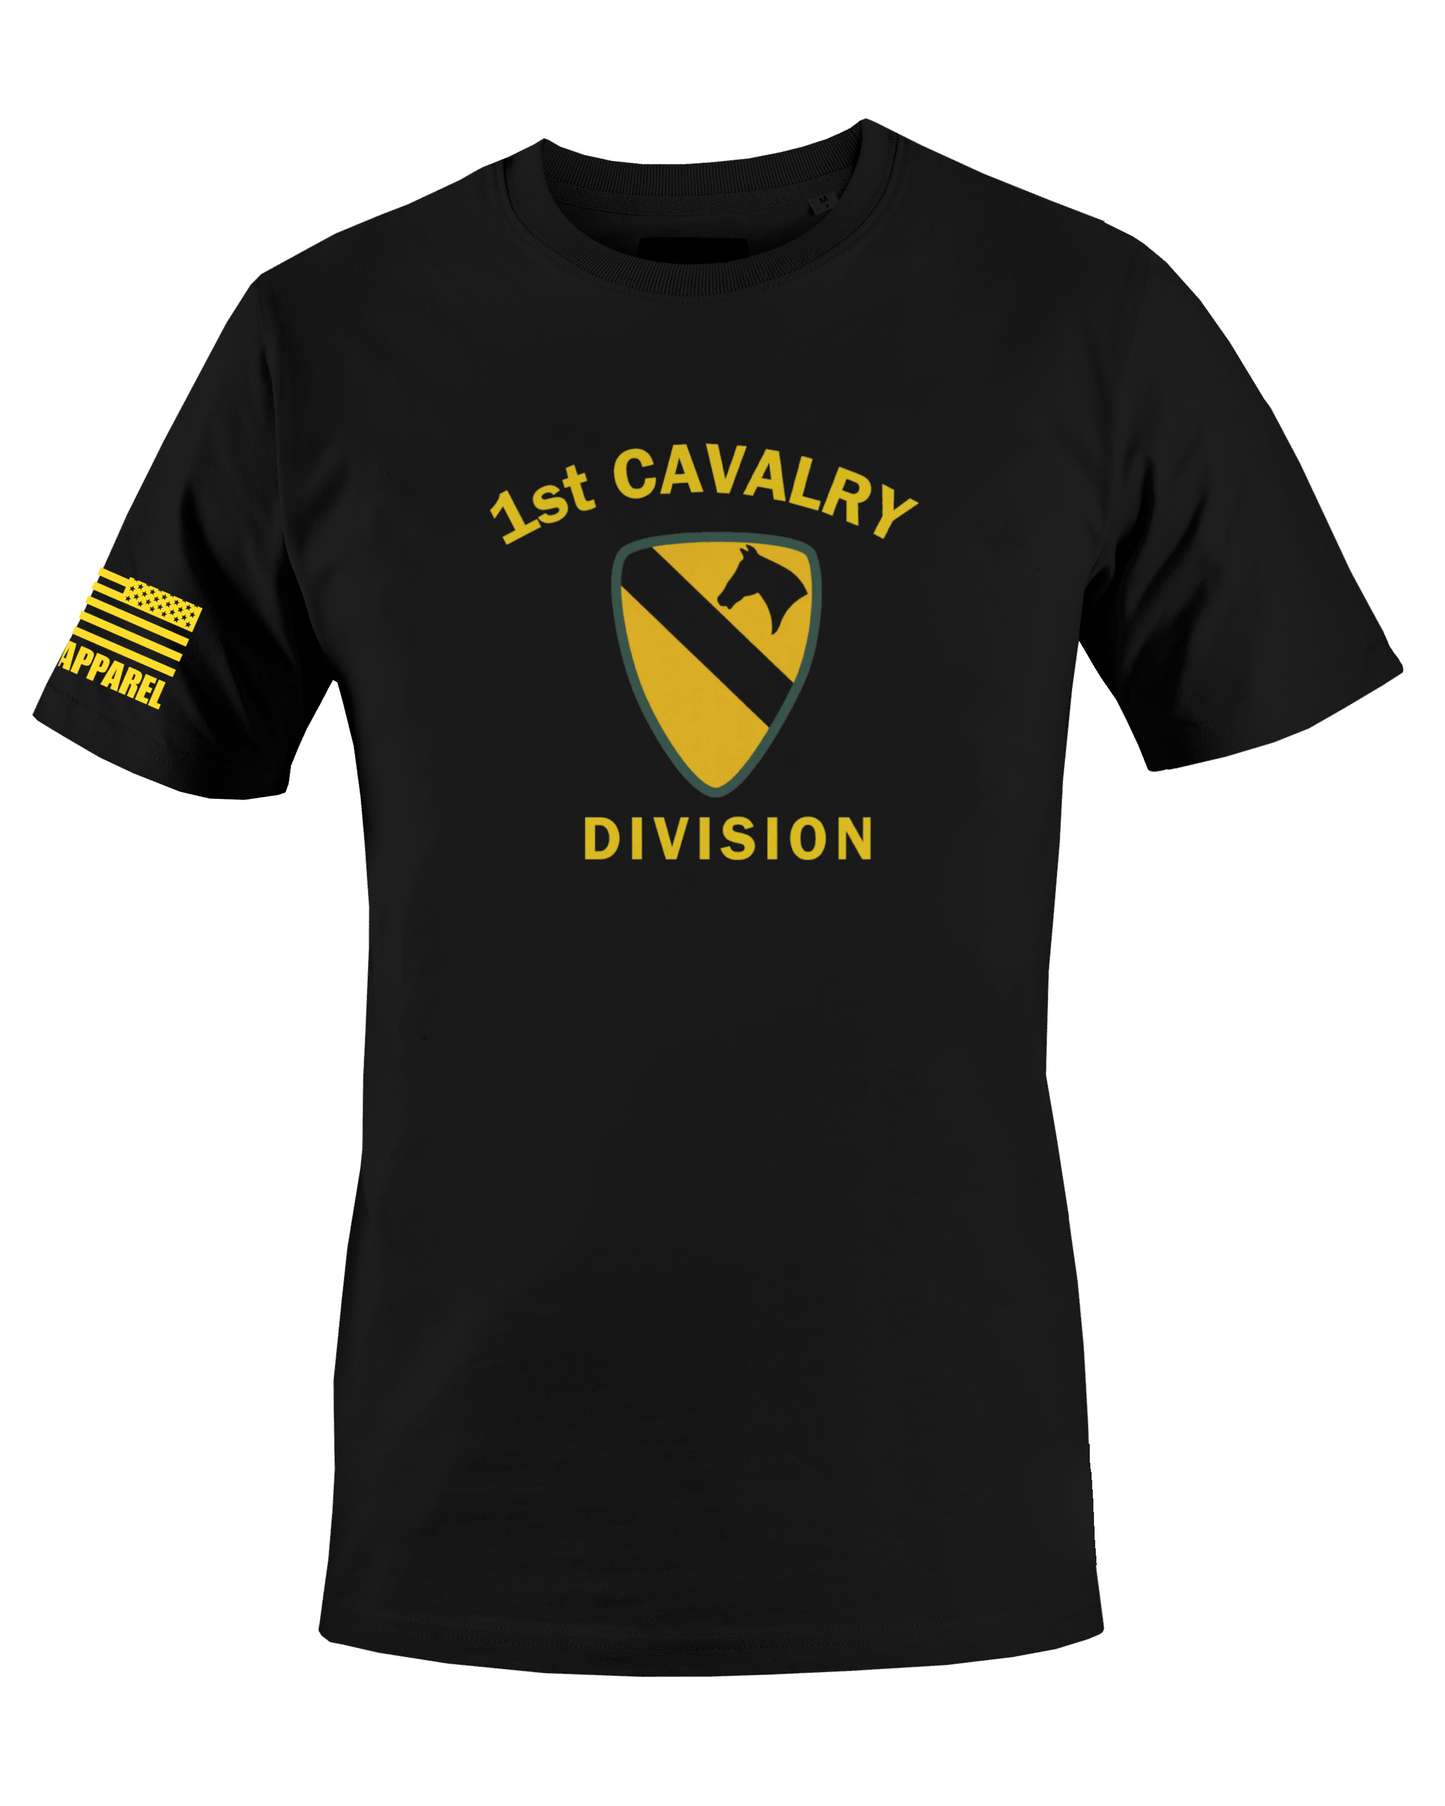 1st CAVALRY DIVISION